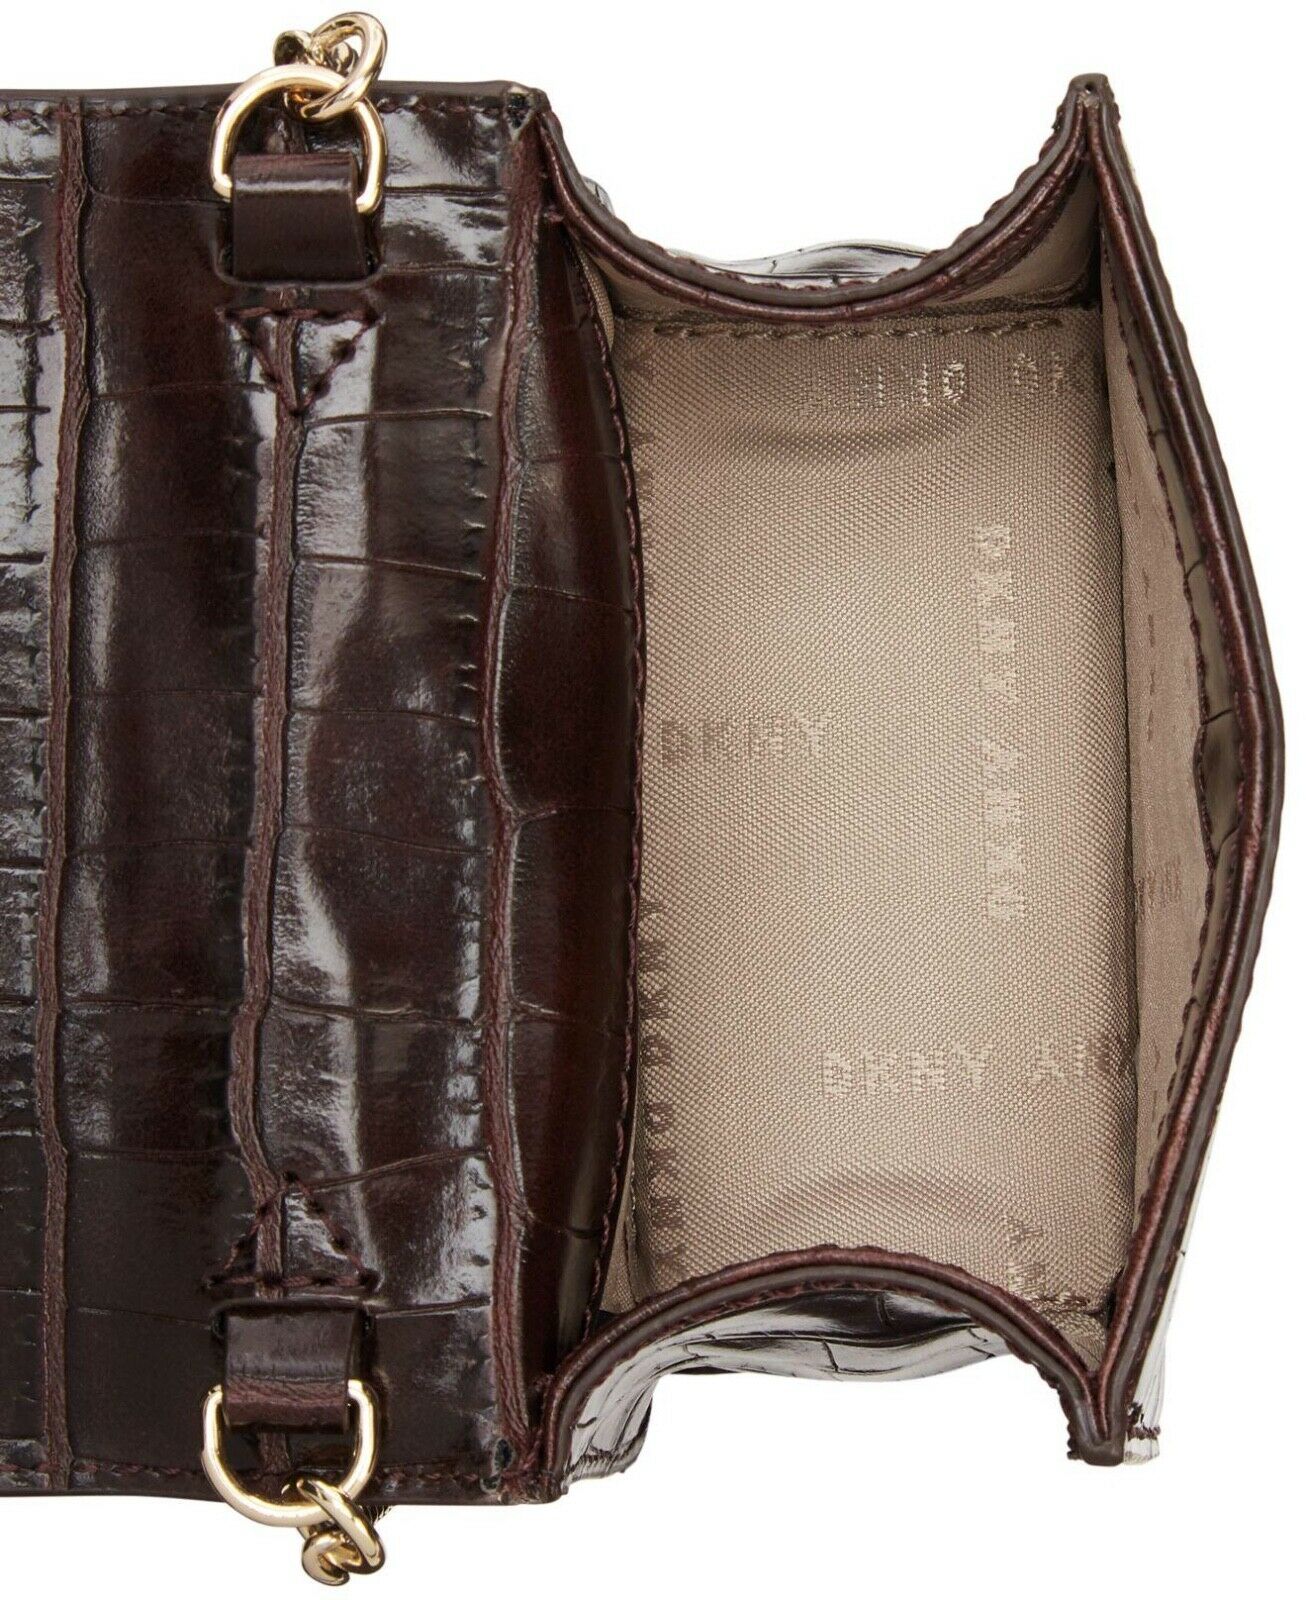 DKNY DKNY micro crossbody bag in black croco print leather